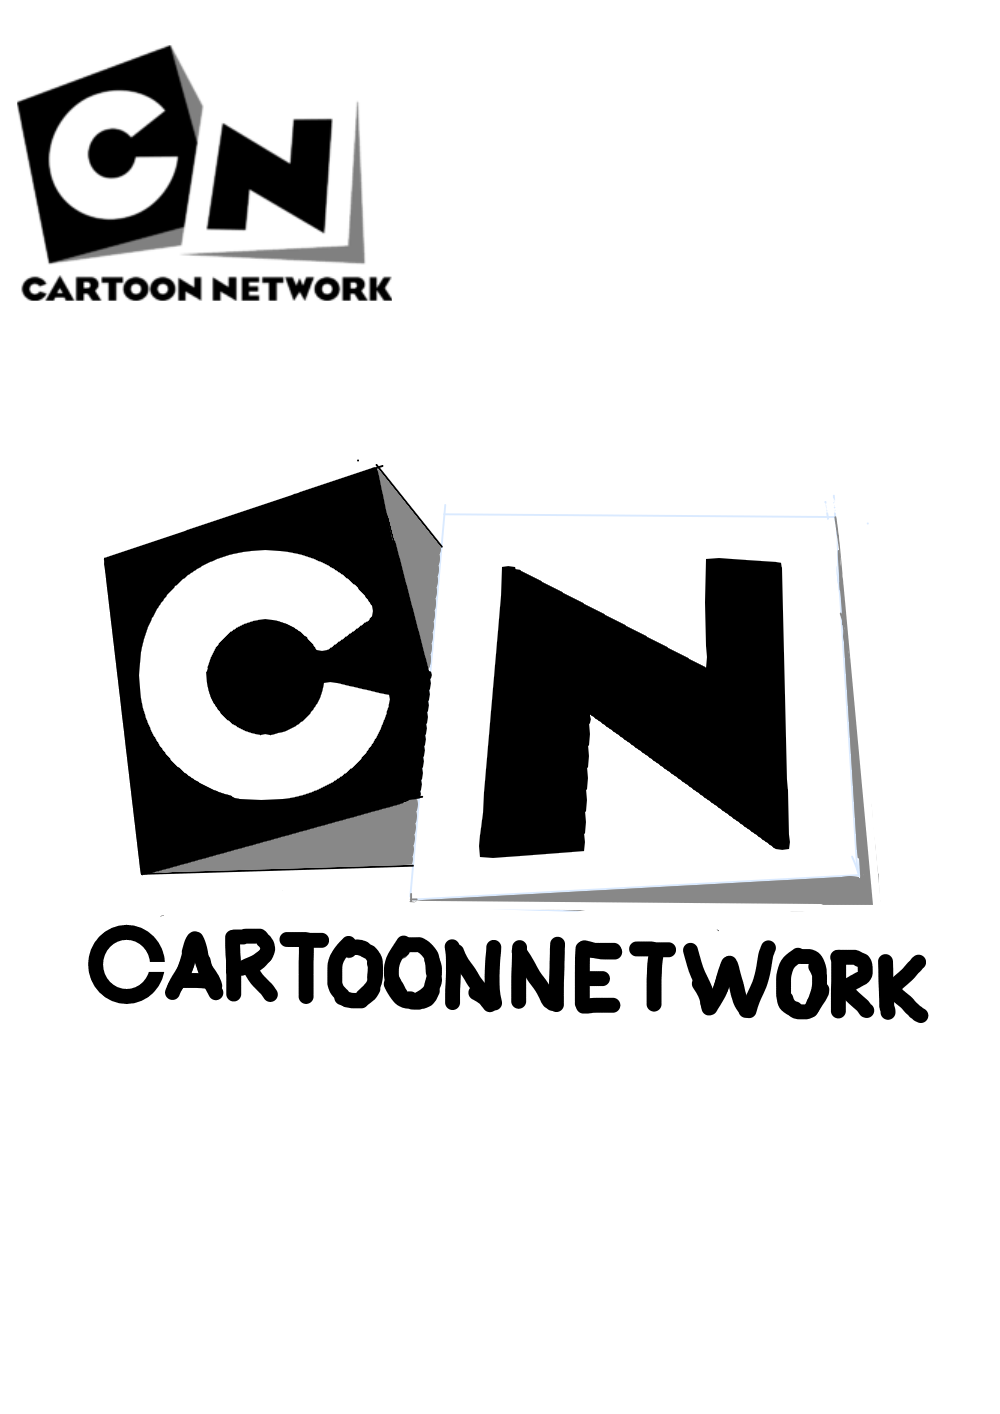 Cartoon Network logo (my drawing) by PurpleDino100 on DeviantArt